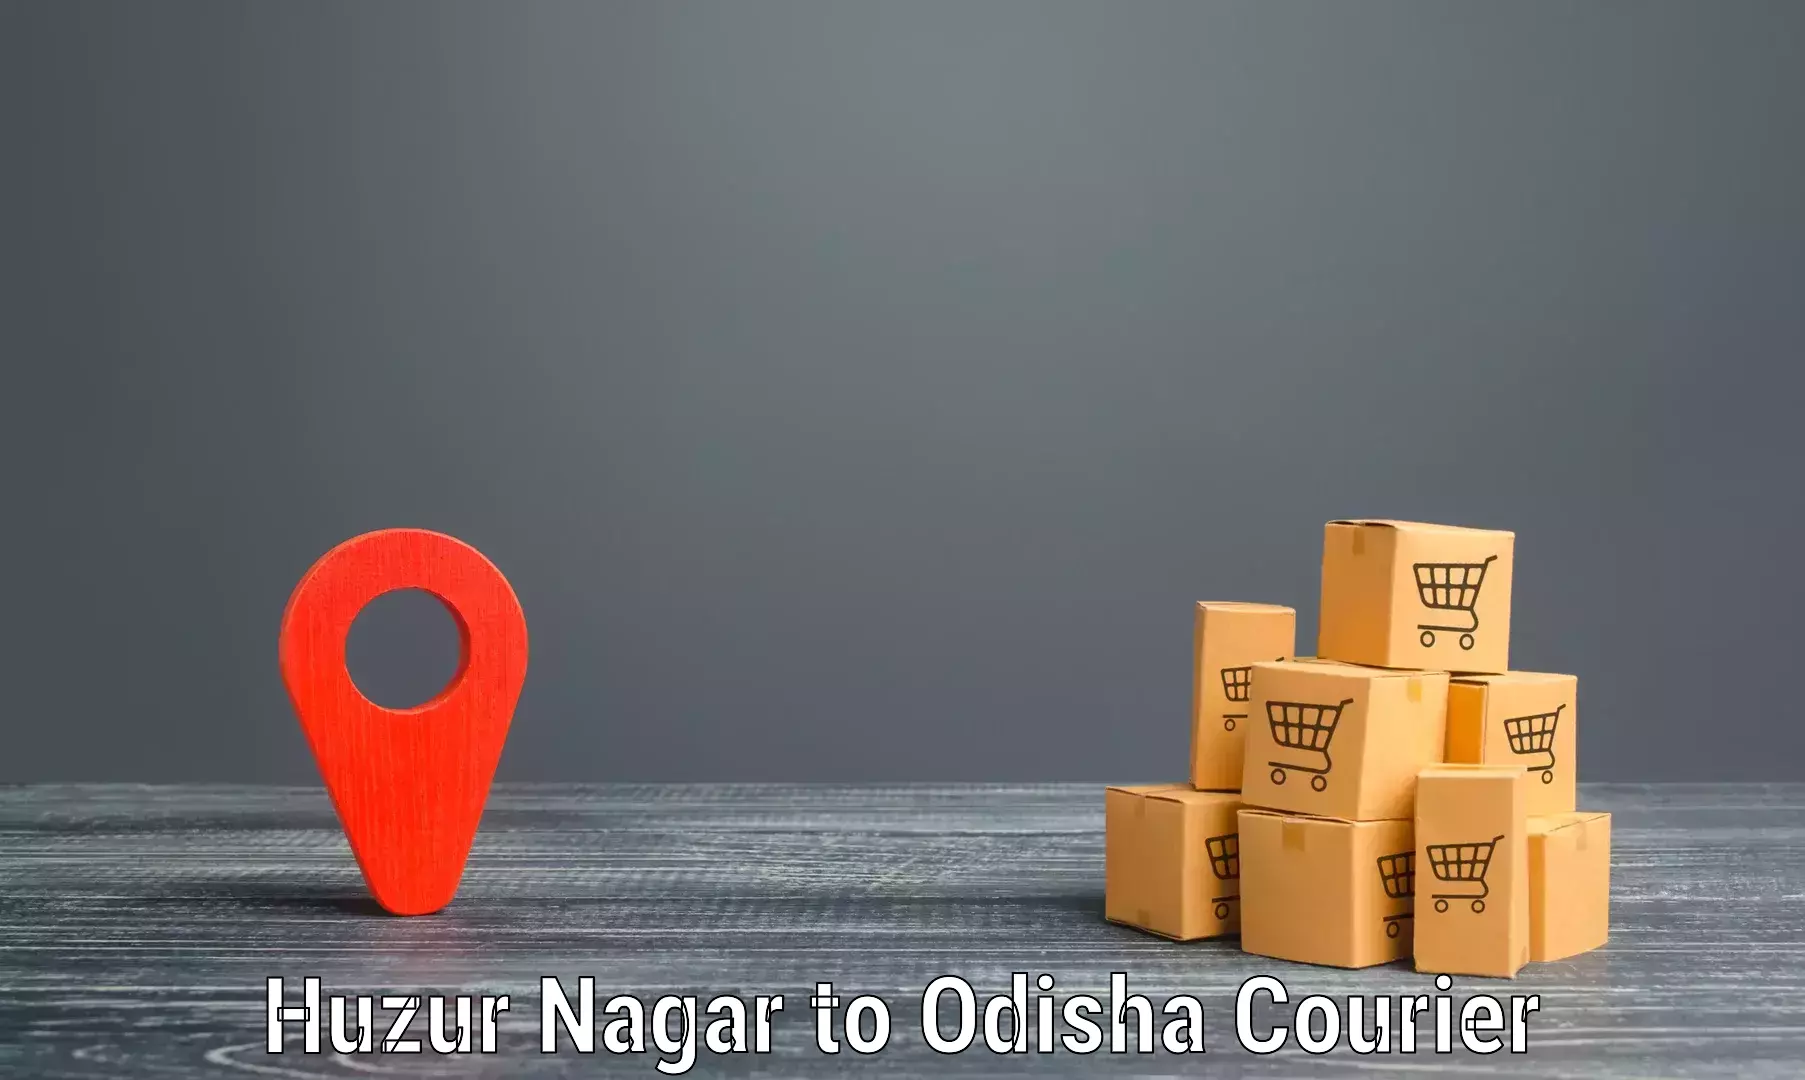 Reliable logistics providers Huzur Nagar to Raruan